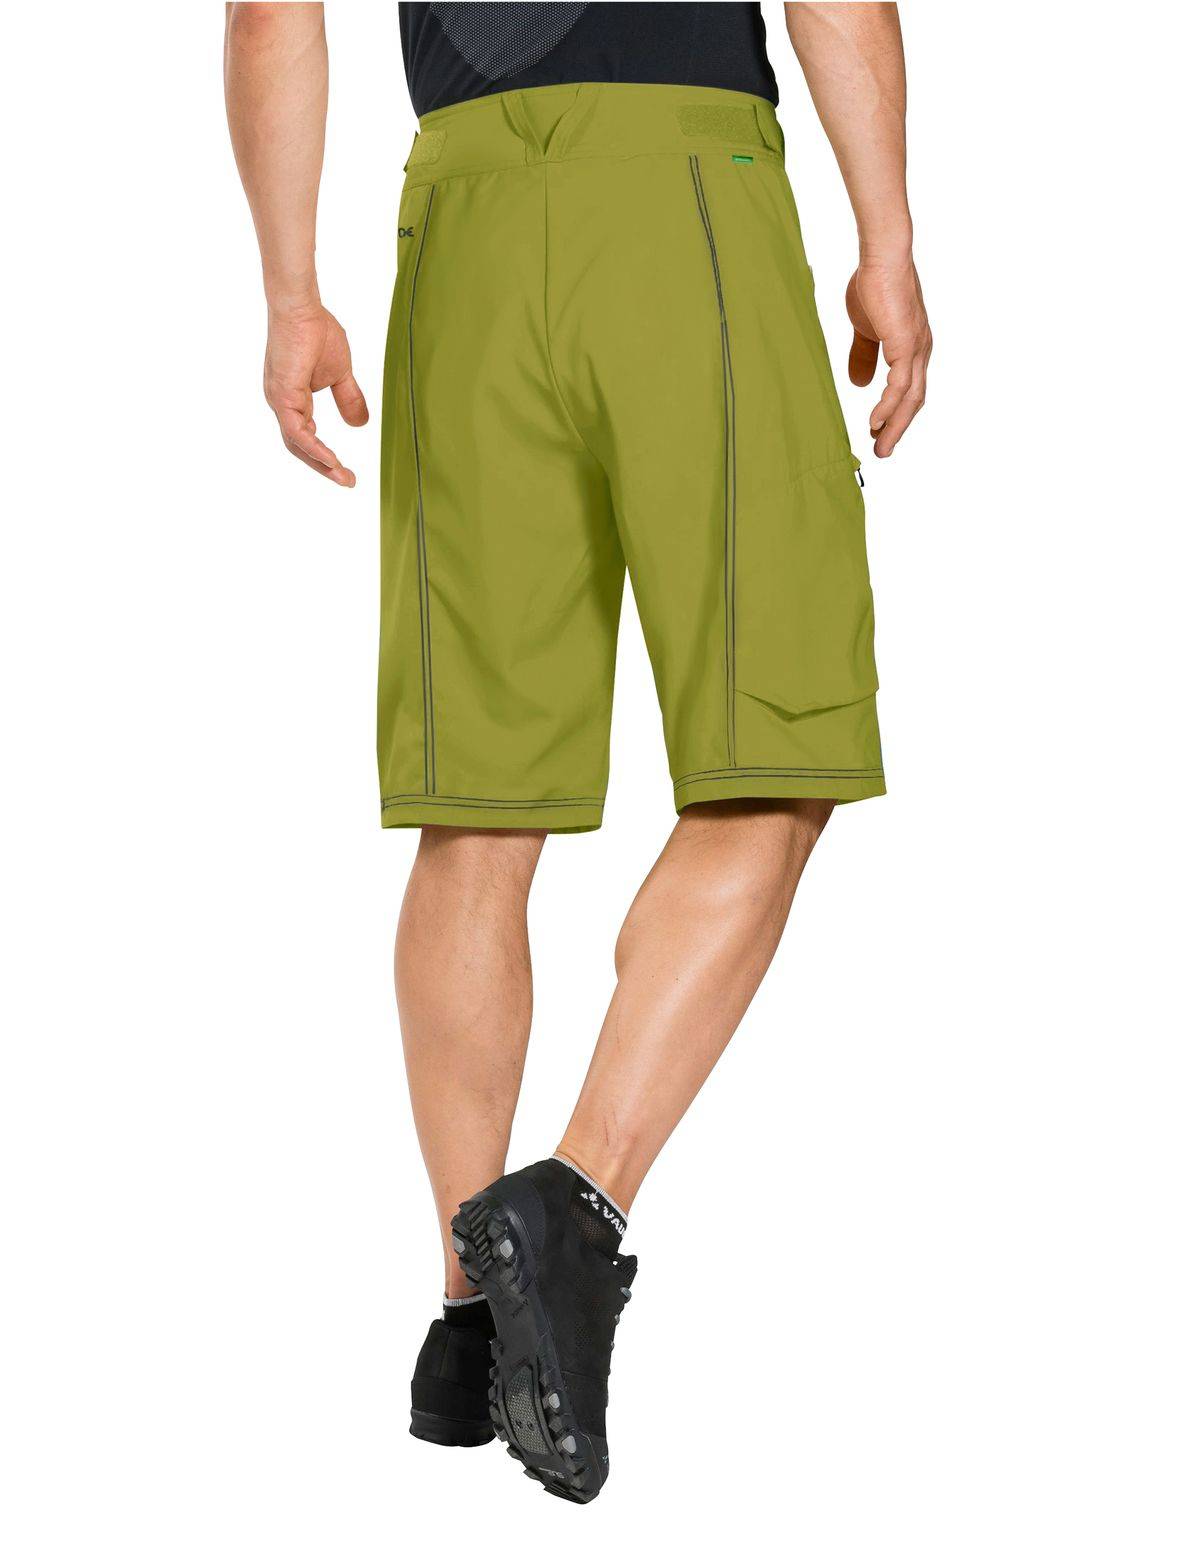 Men\'s bicycle shorts with reklamowa i | BRANDS MEN\'S \\ VAUDE Green green Gadżety - CYCLING Markowe Dystrybutor Ledro odzież Red \\ CLOTHING Vaude Bird insole 